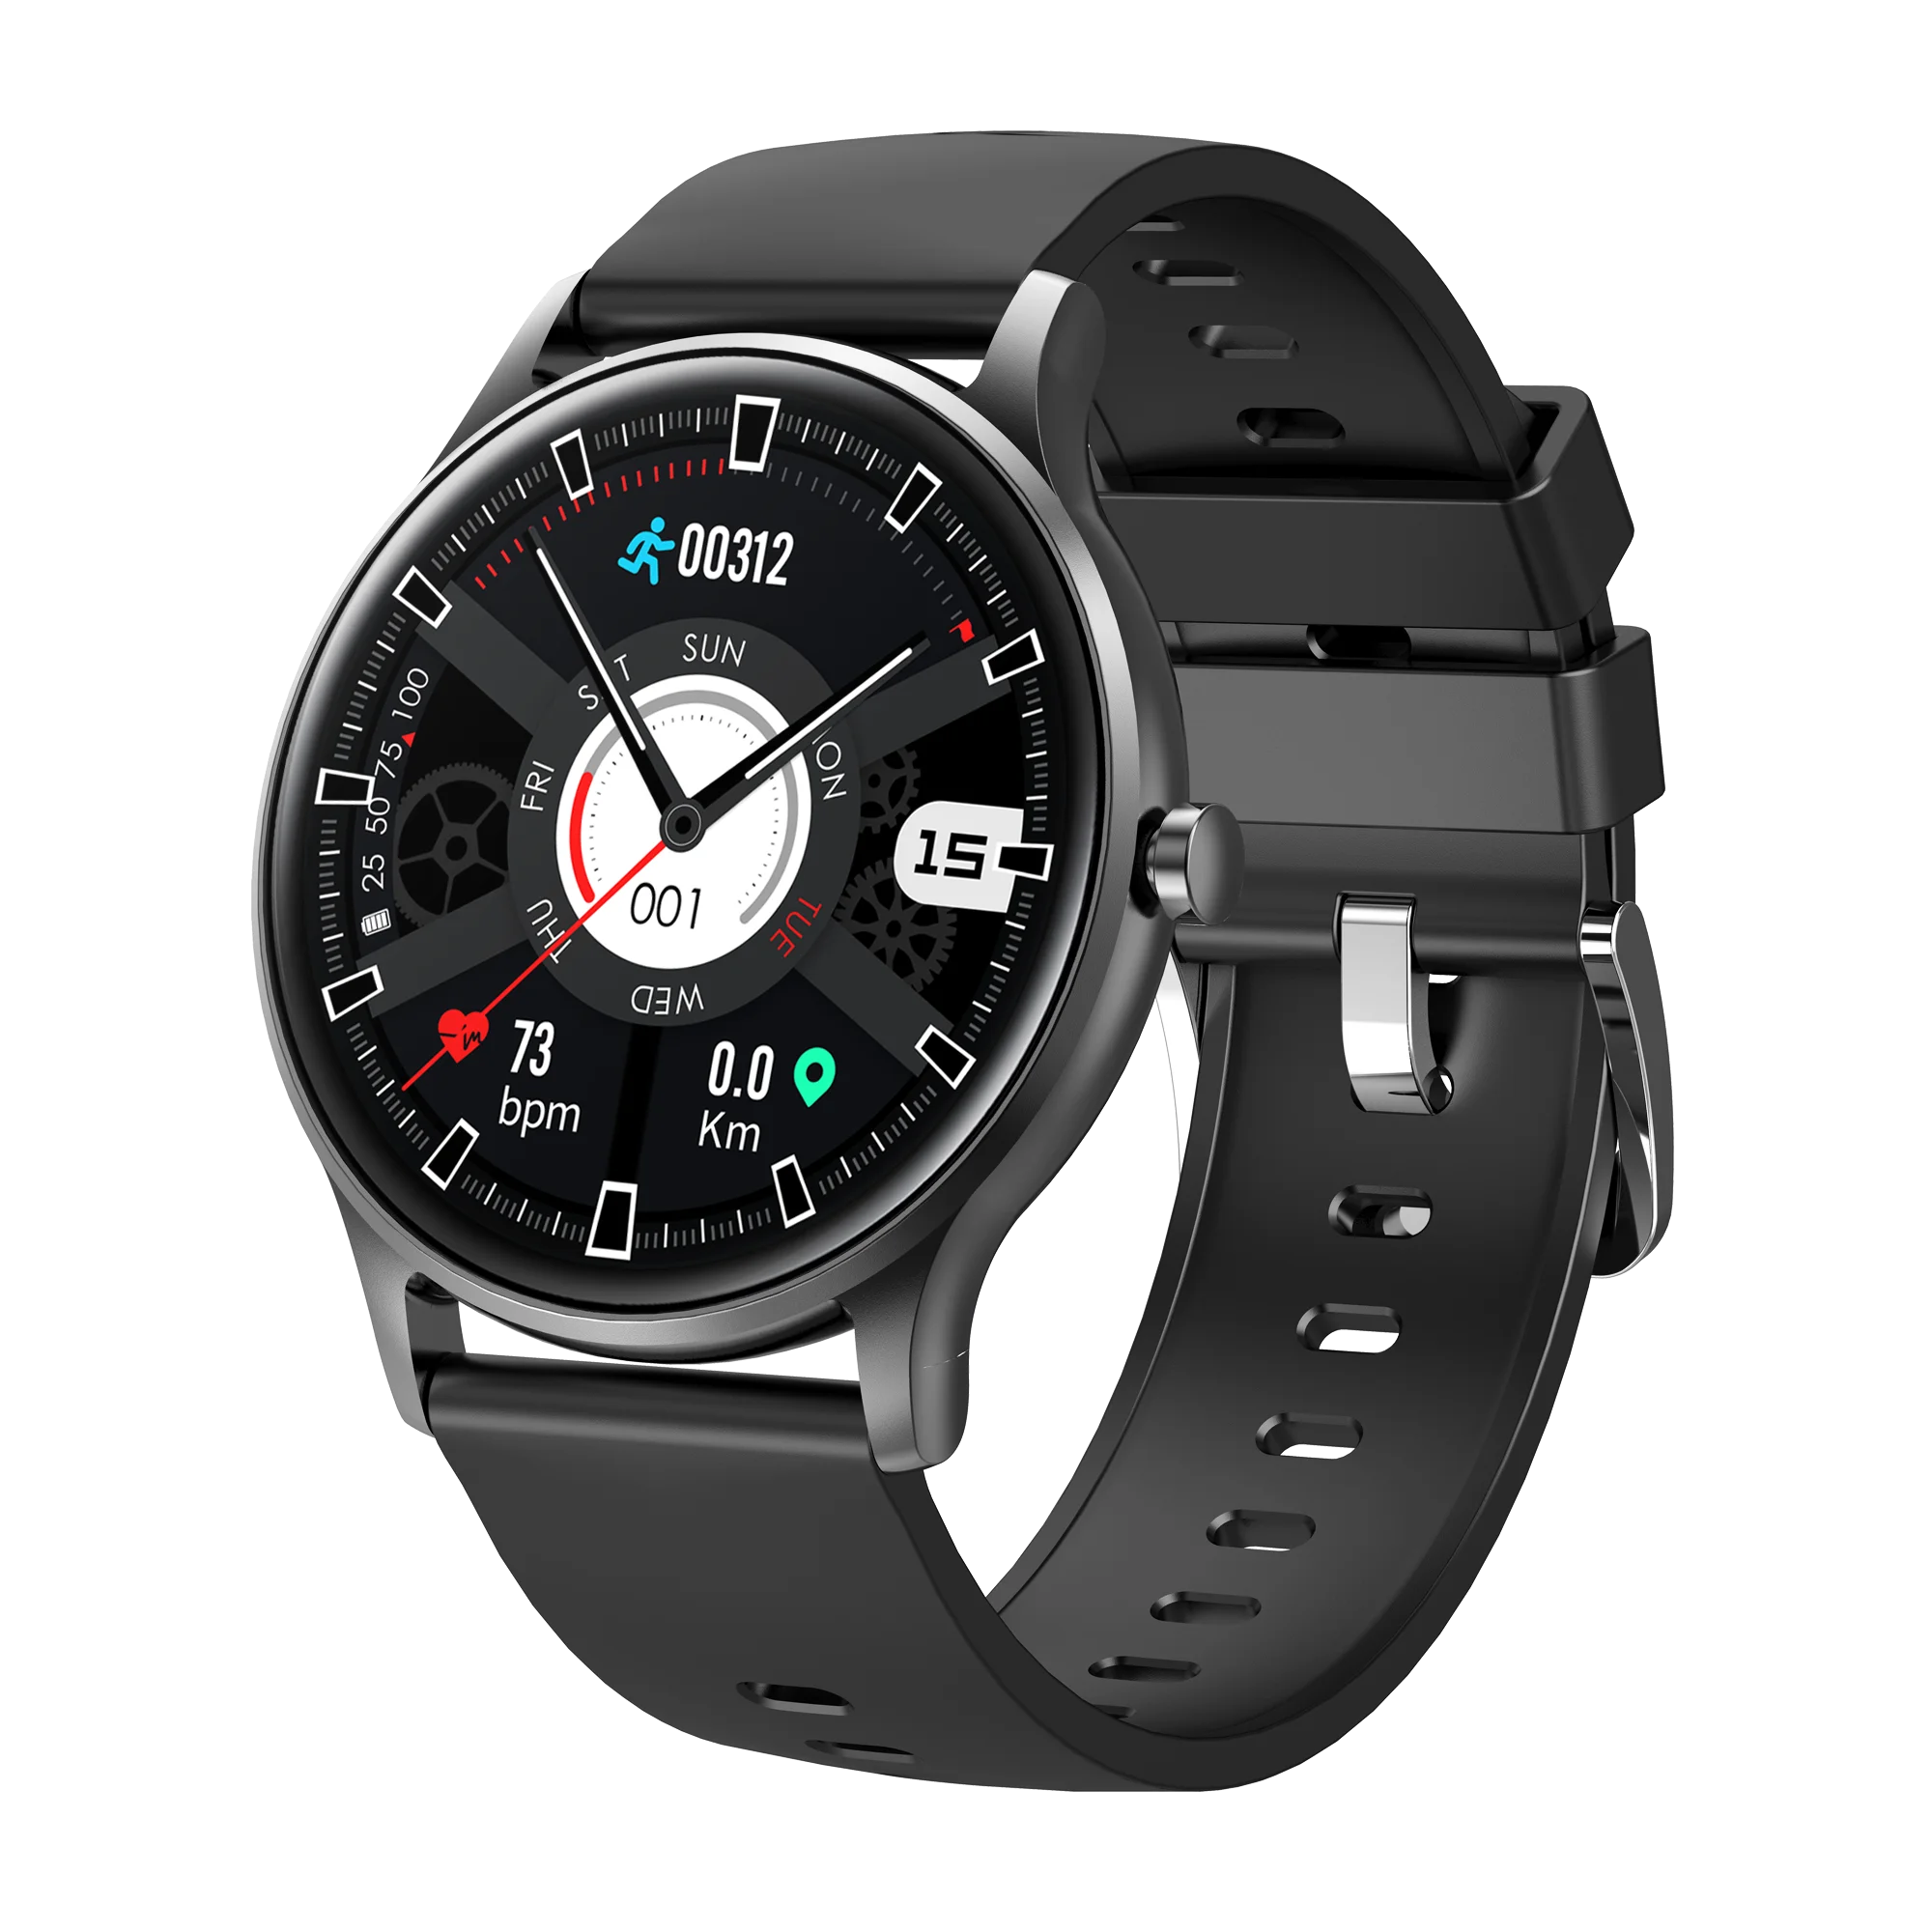 

2021 S33 new arrivals relojes inteligentes smartwatch sport ip68 waterproof HR SpO2 BT fitness track smart watch for men women, Black/gray/blue/pink/red/green